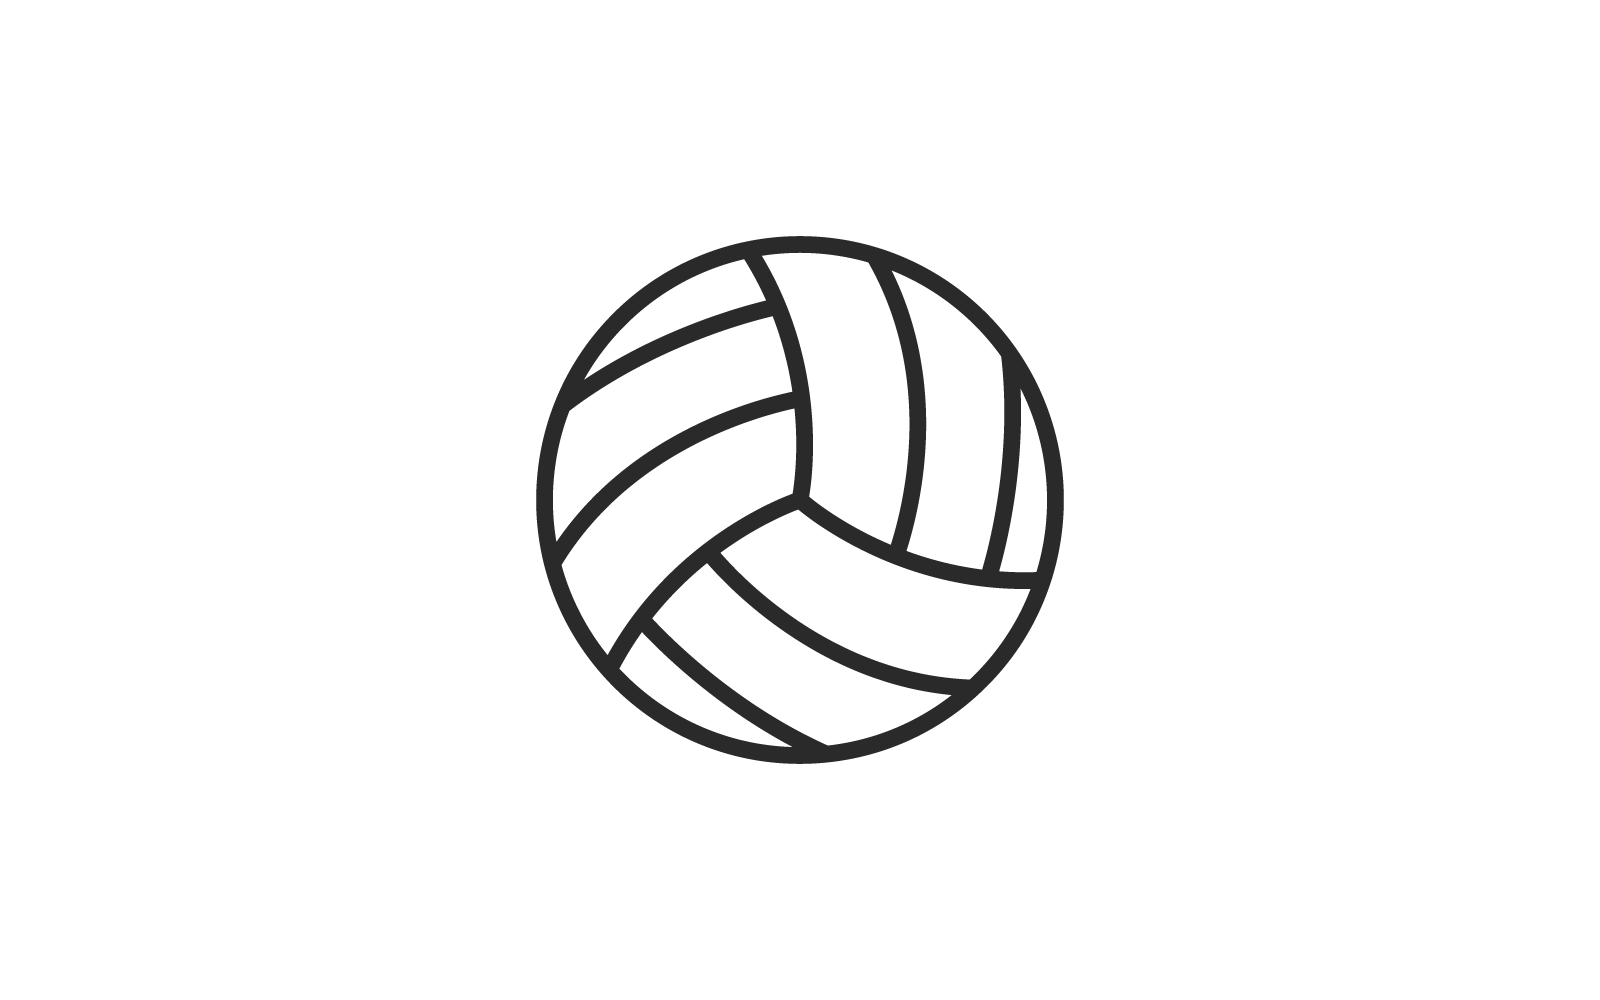 Volley ball logo vector flat design illustration template